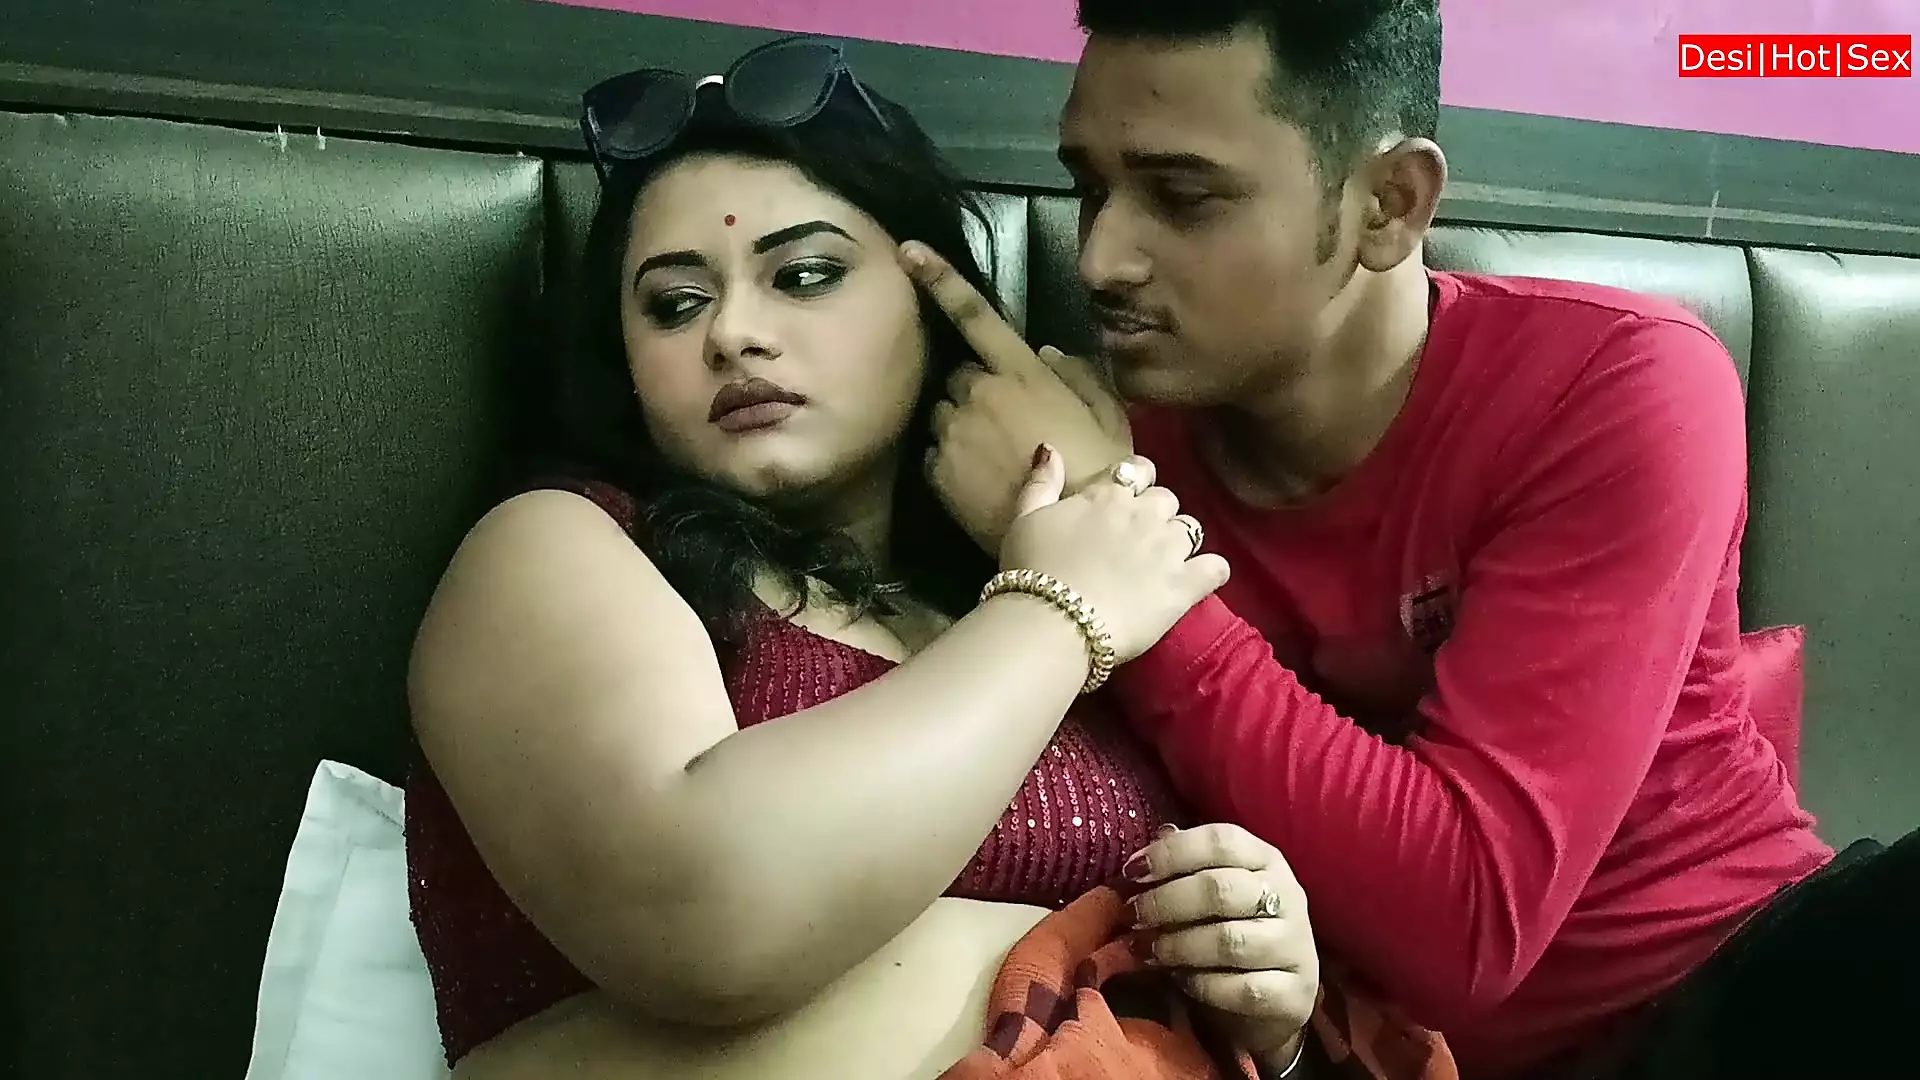 Desi Pure Hot Bhabhi Fucking with Neighbour Boy! Hindi Web pic